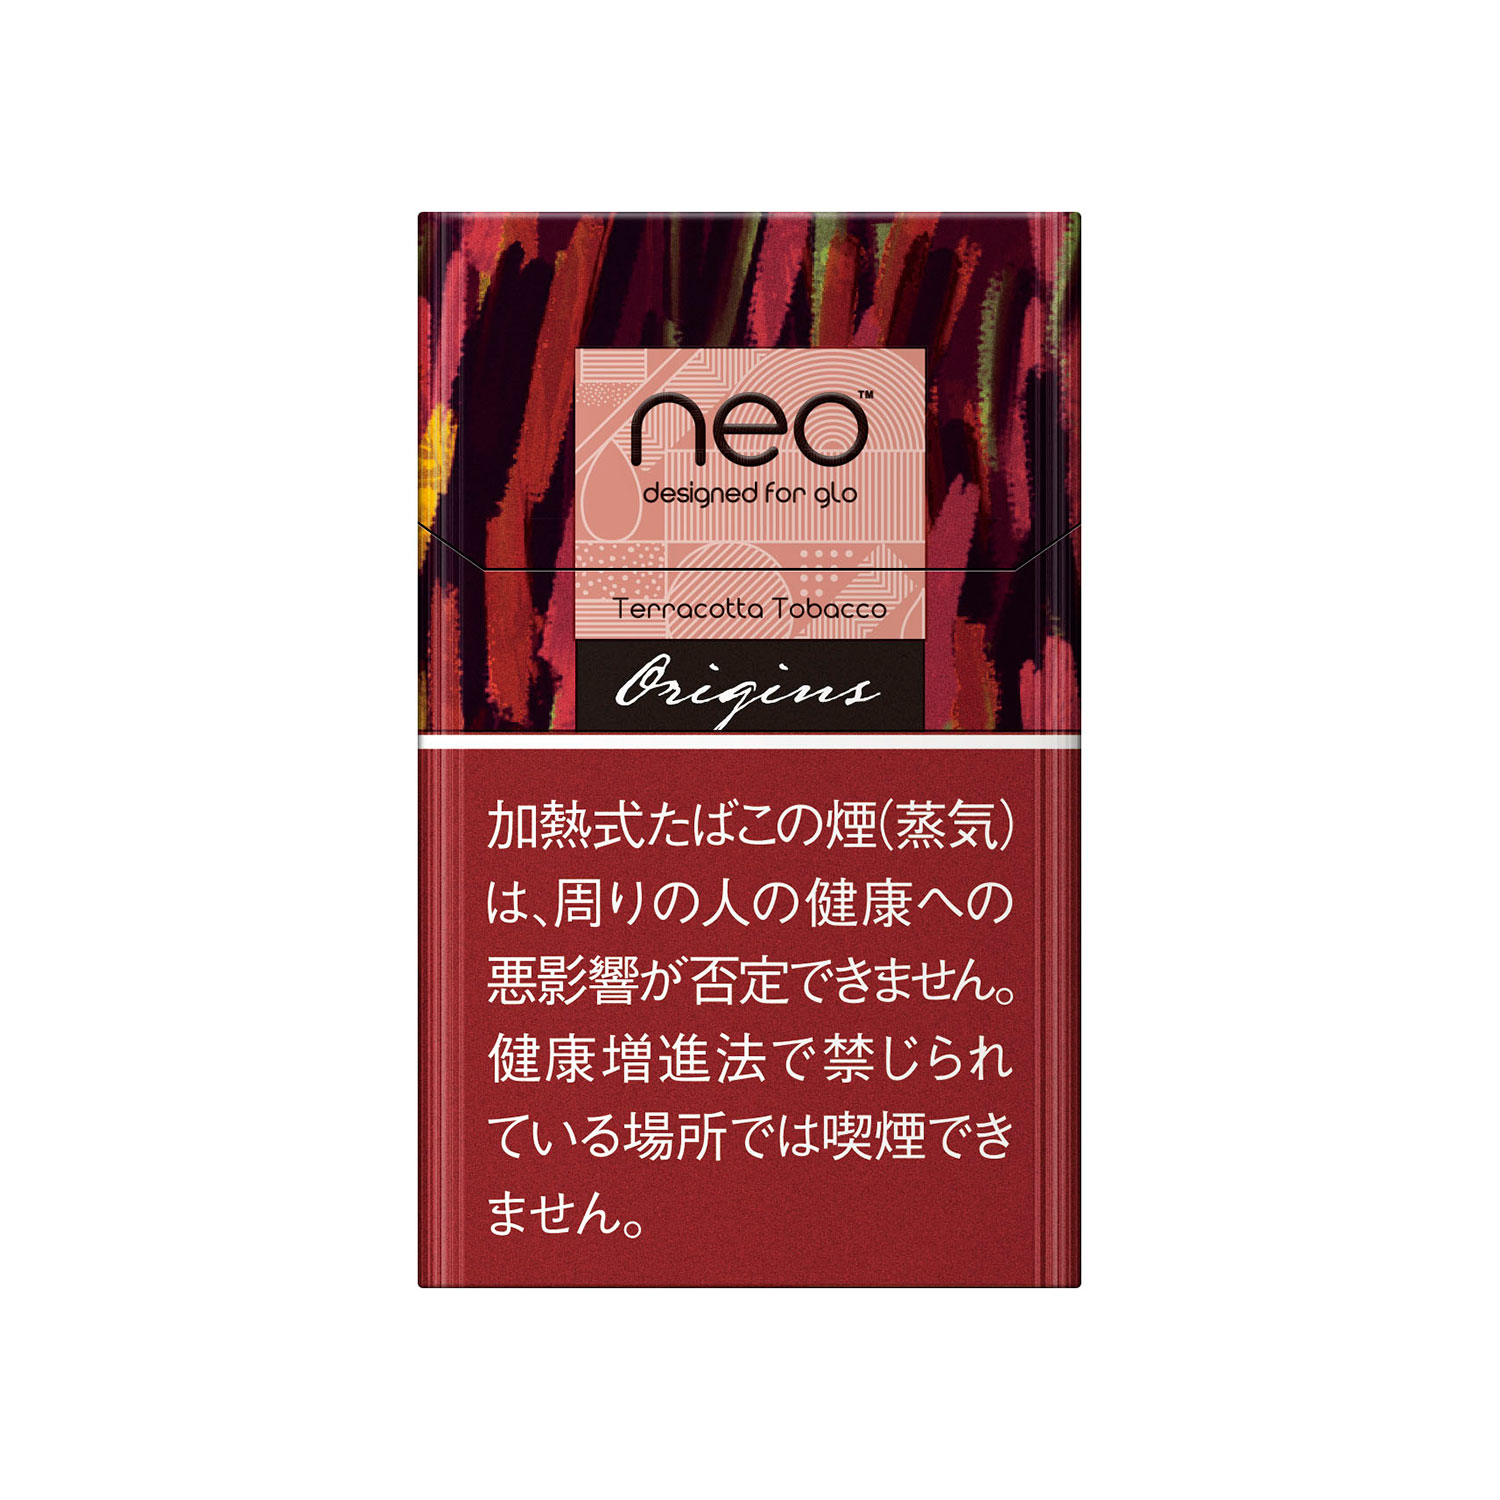 neo™ Terracotta Tobacco sticks for glo™ hyper